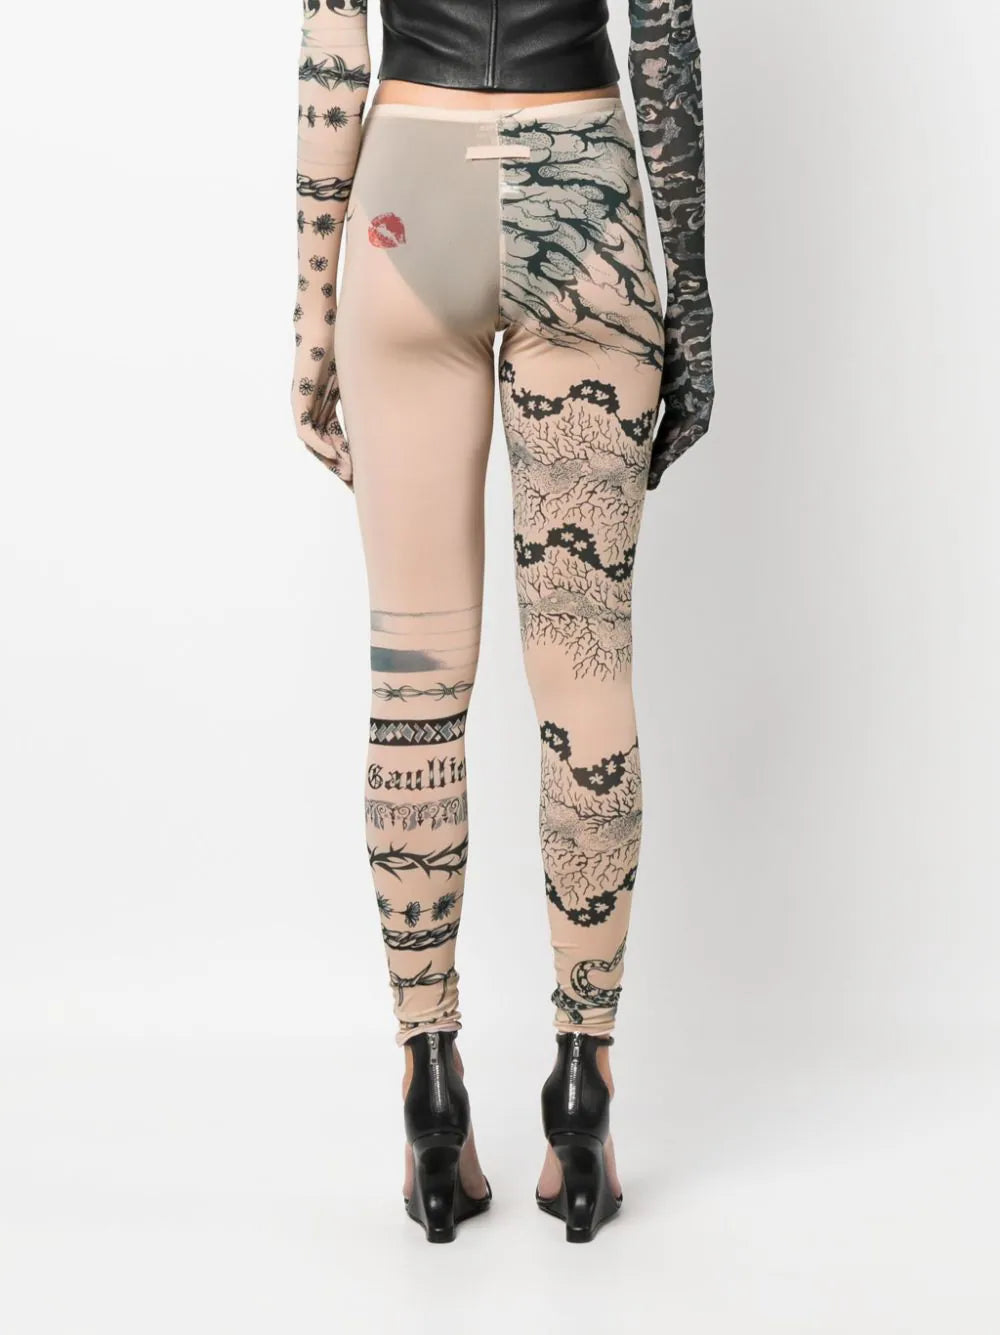 JEAN PAUL GAULTIER WOMEN Tattoo Printed Effect Leggings Nude/Grey/Black - MAISONDEFASHION.COM